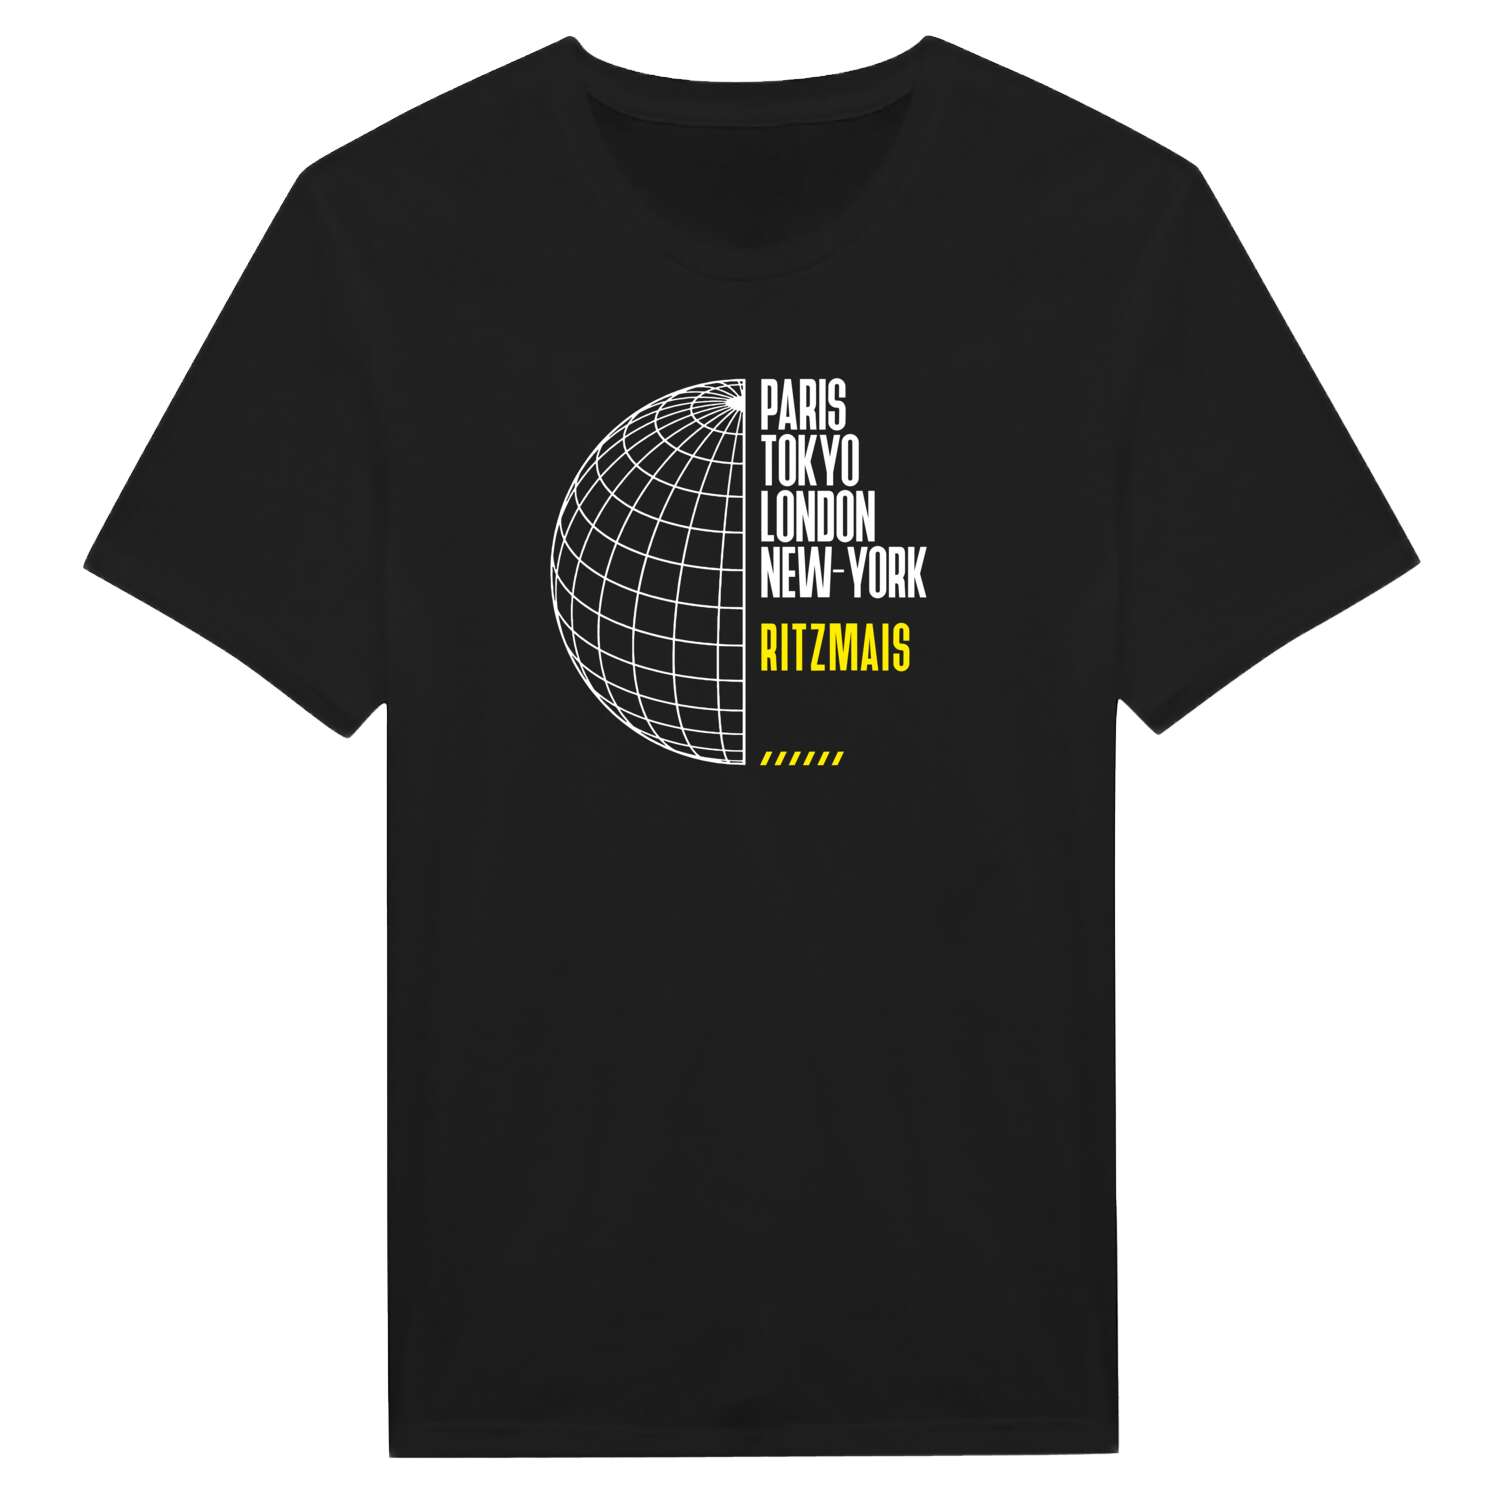 Ritzmais T-Shirt »Paris Tokyo London«